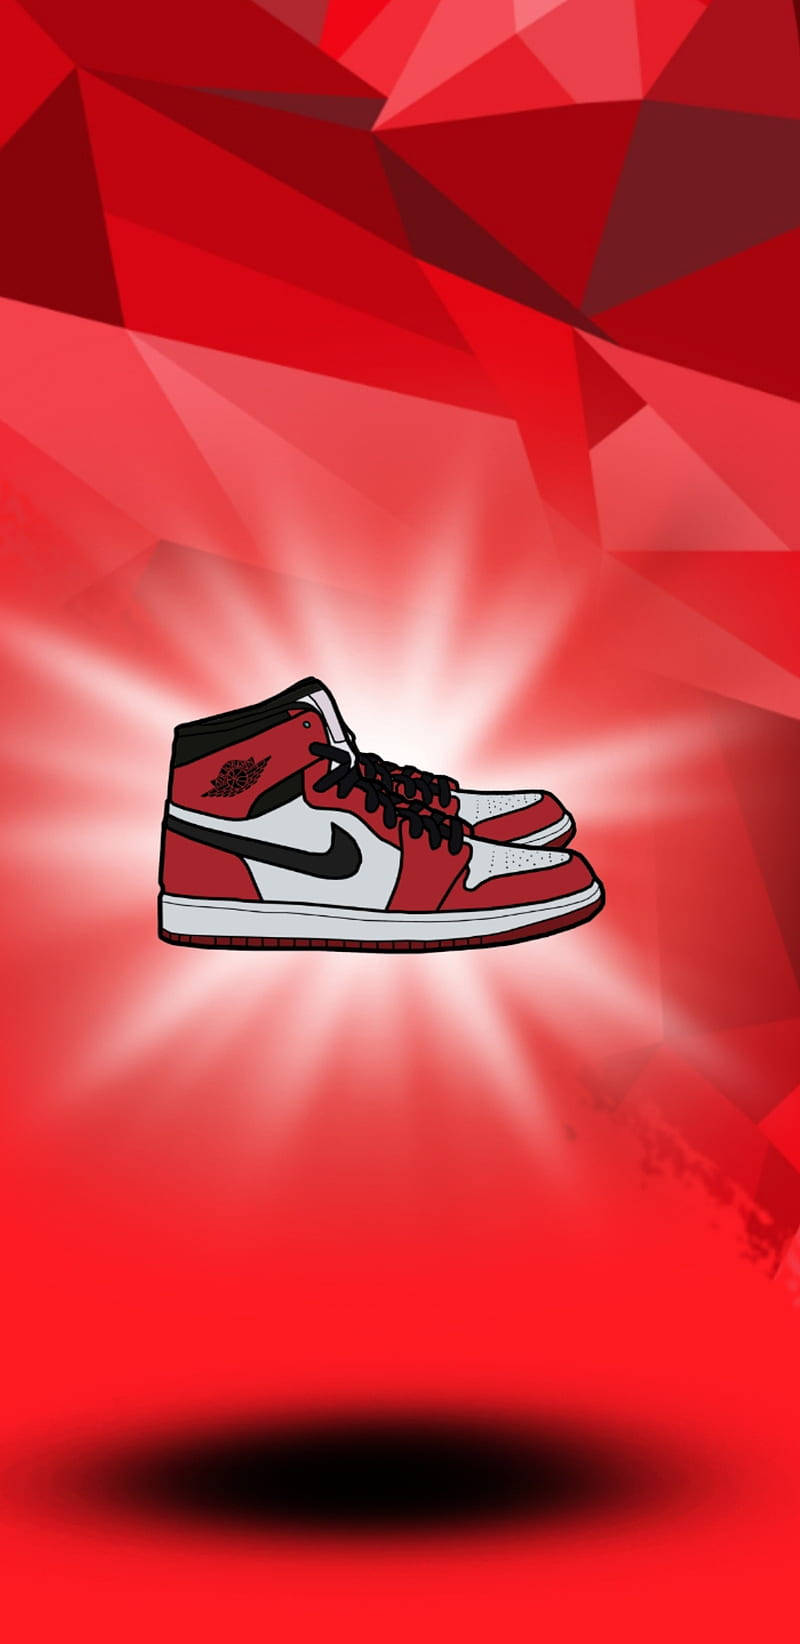 Nike Air Jordan 1 Chicago Red Background Background